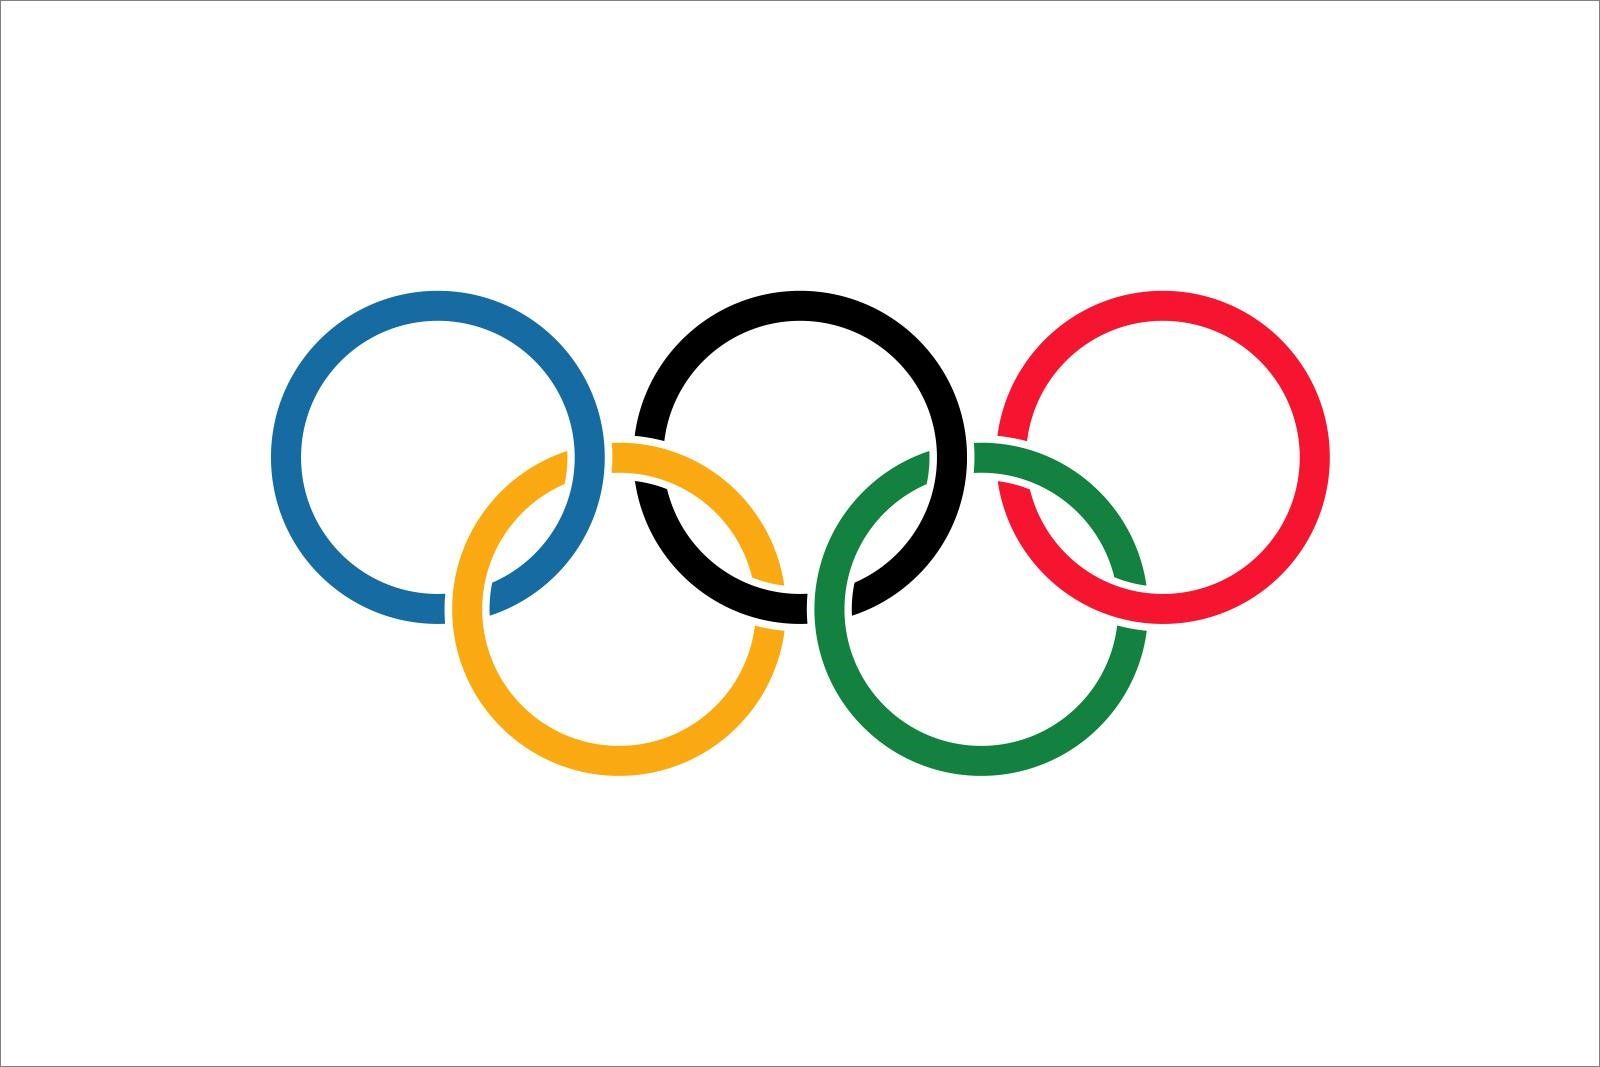 Brisbane chosen to host 2032 Olympics